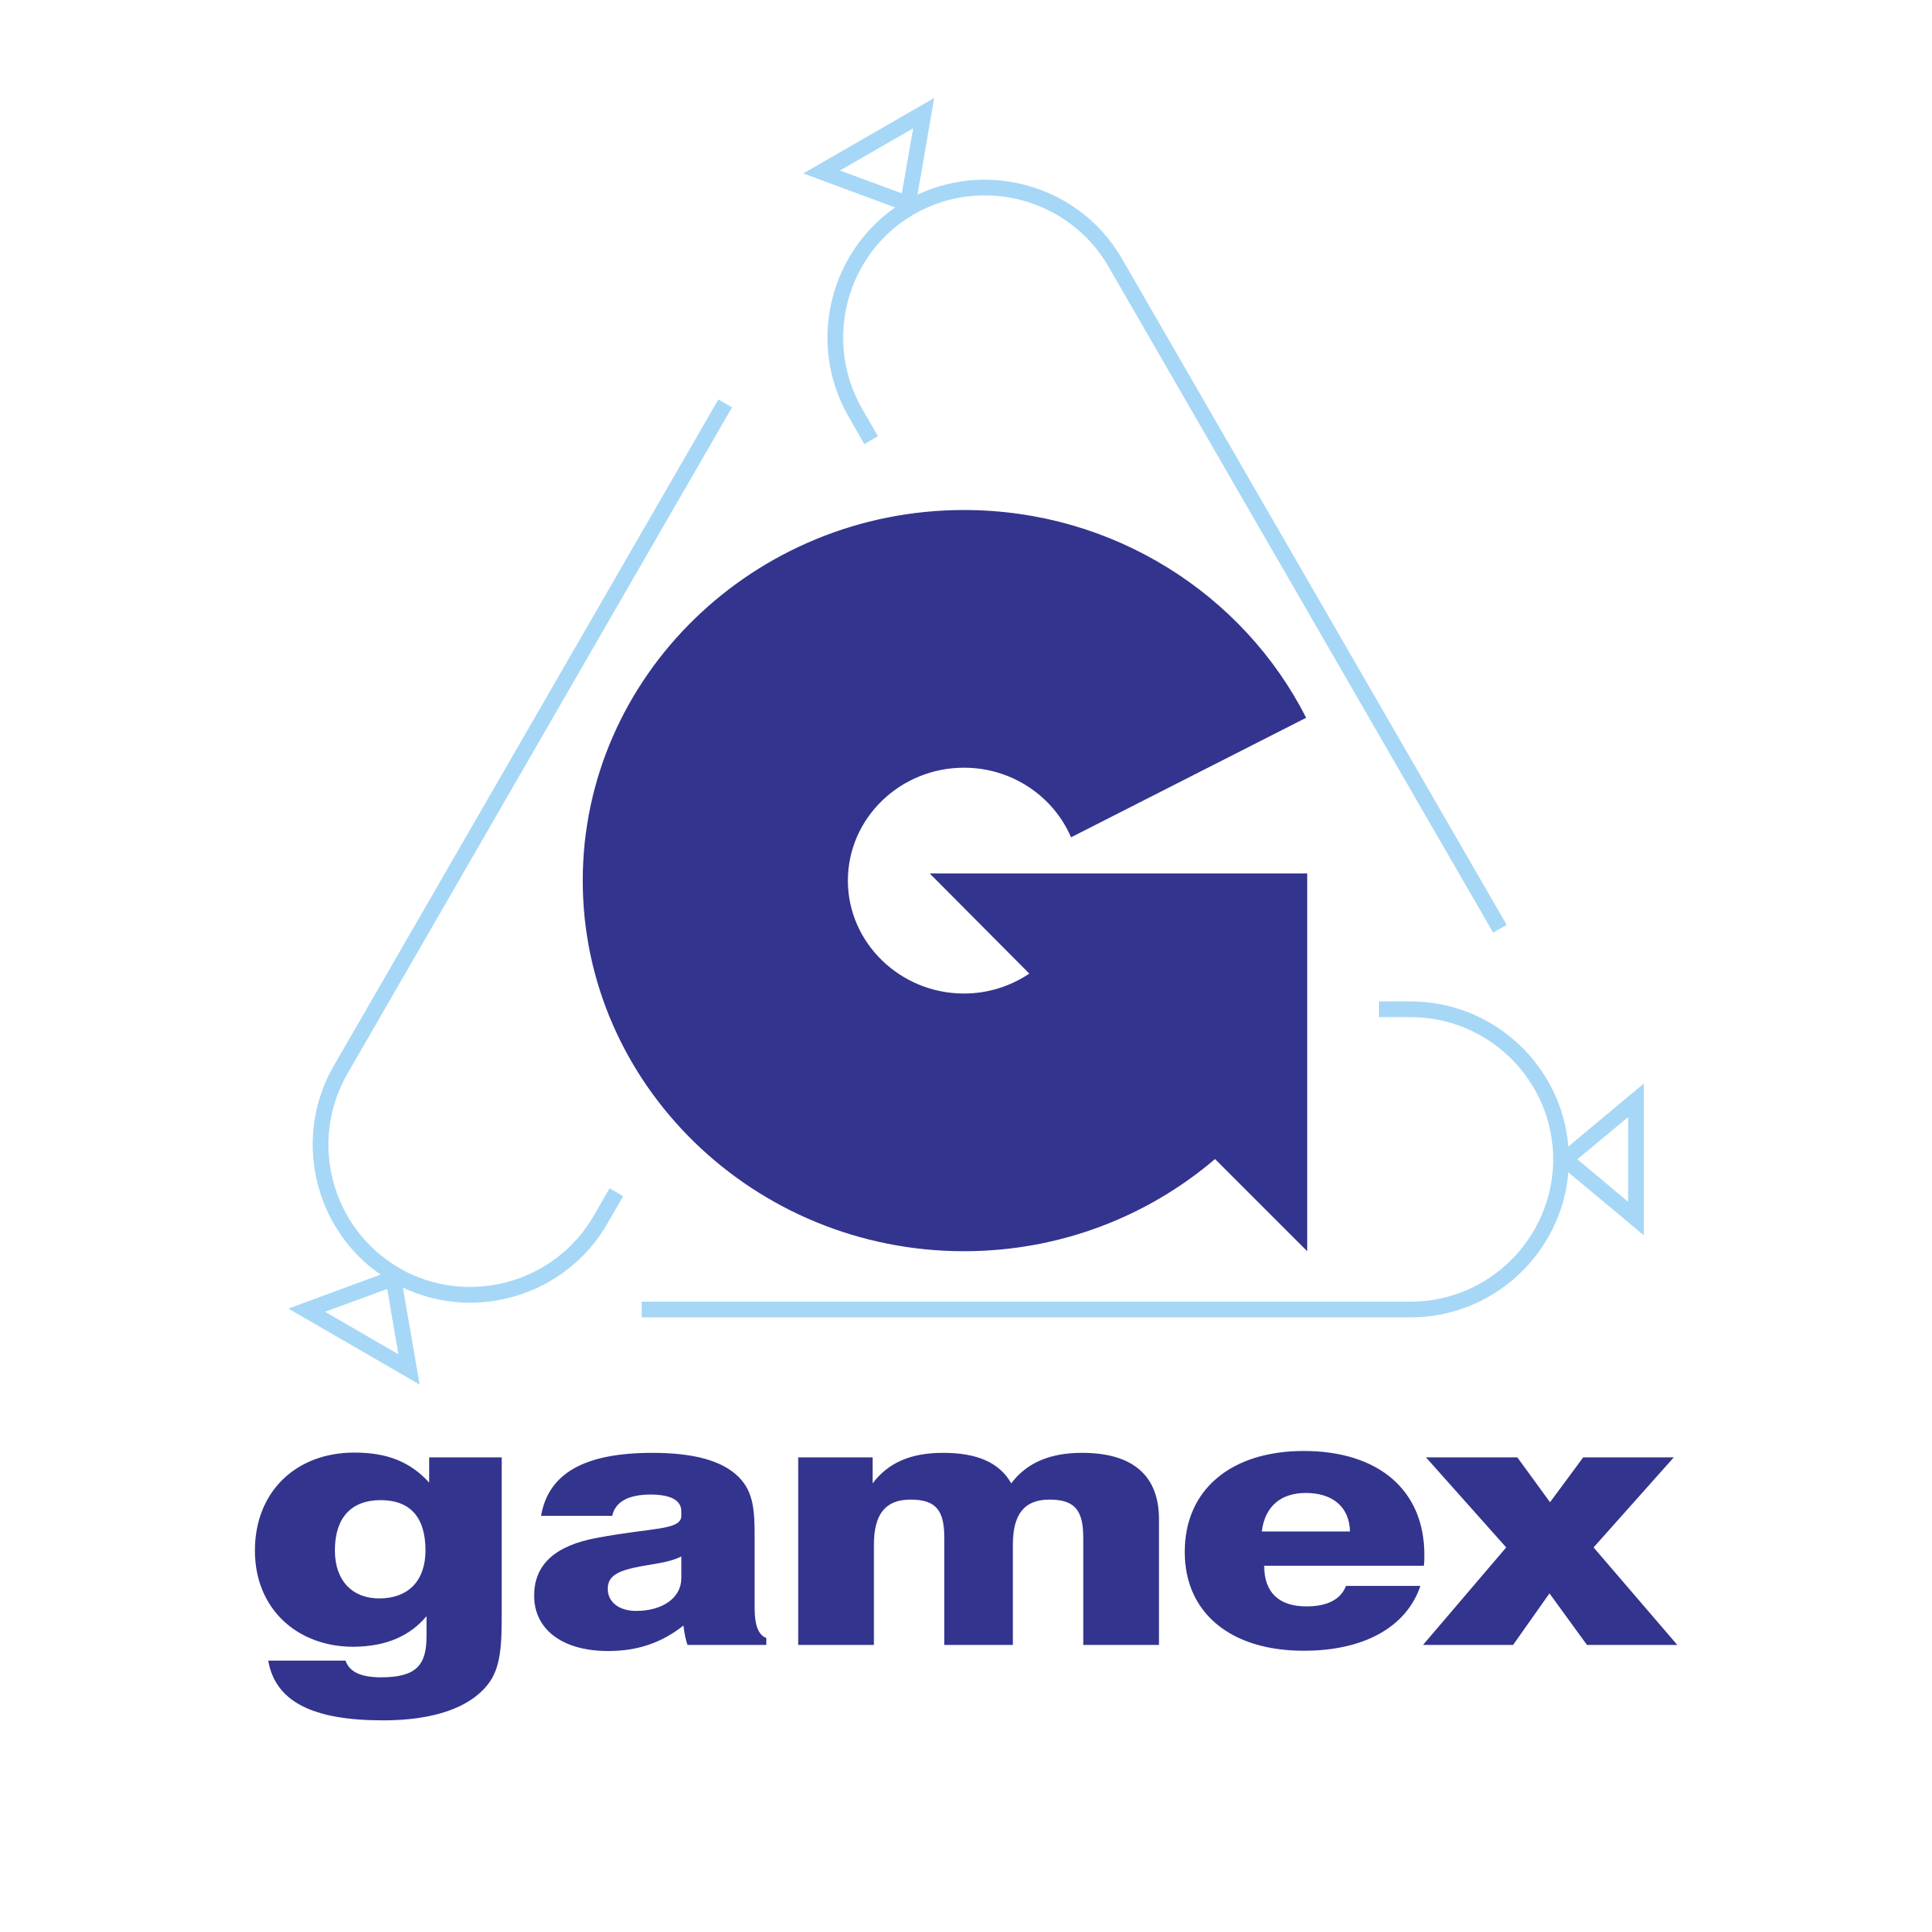 Gamex Logo - Gamex Logo PNG Transparent & SVG Vector